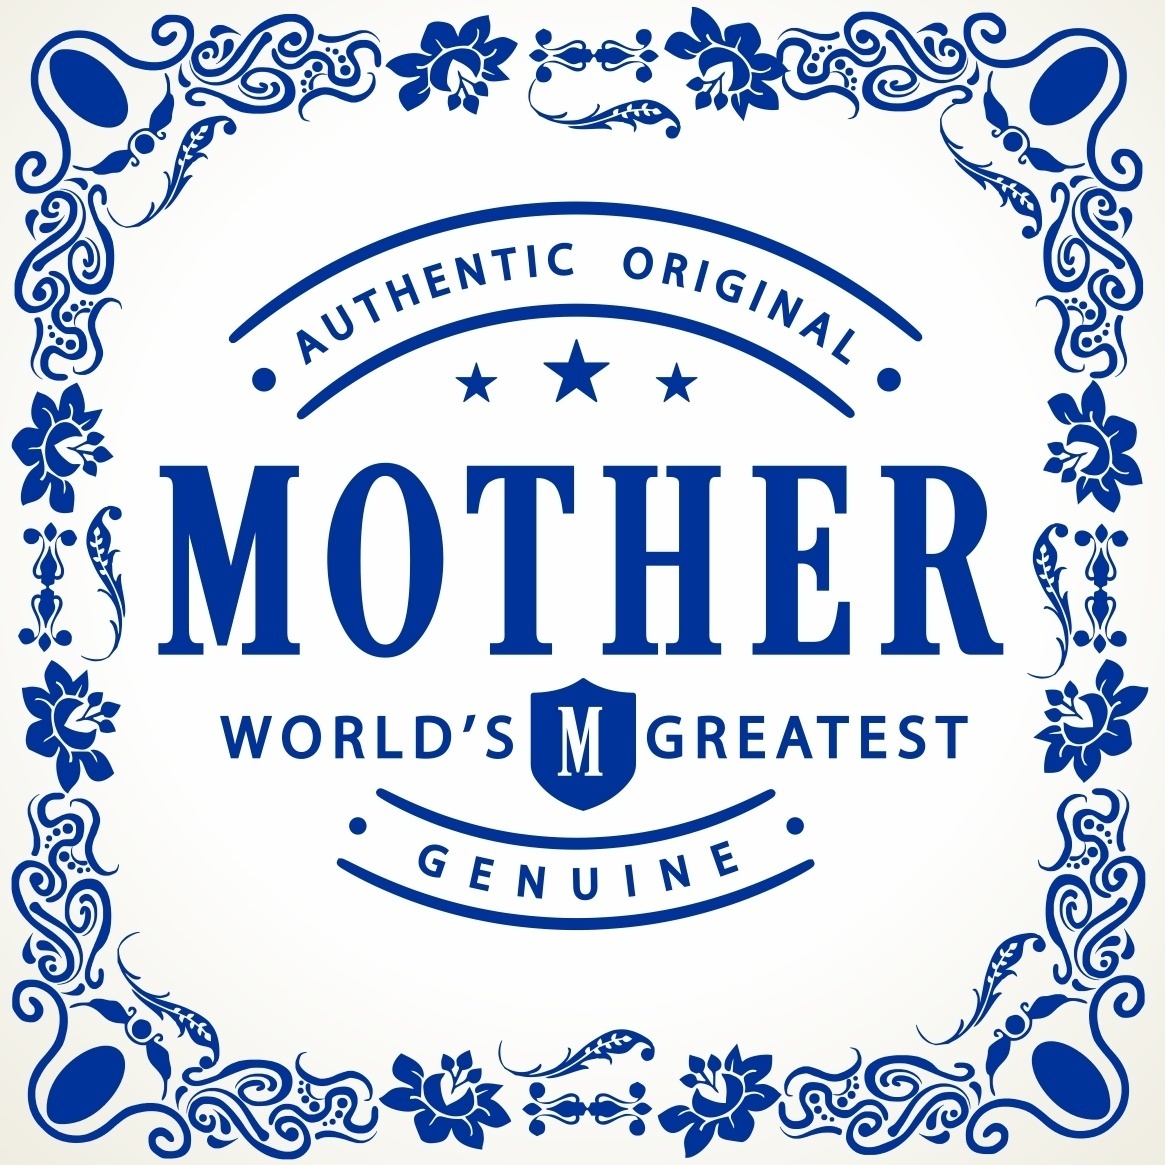 tegeltje authentic original mother world's greatest genuine ultime moederdag cadeau